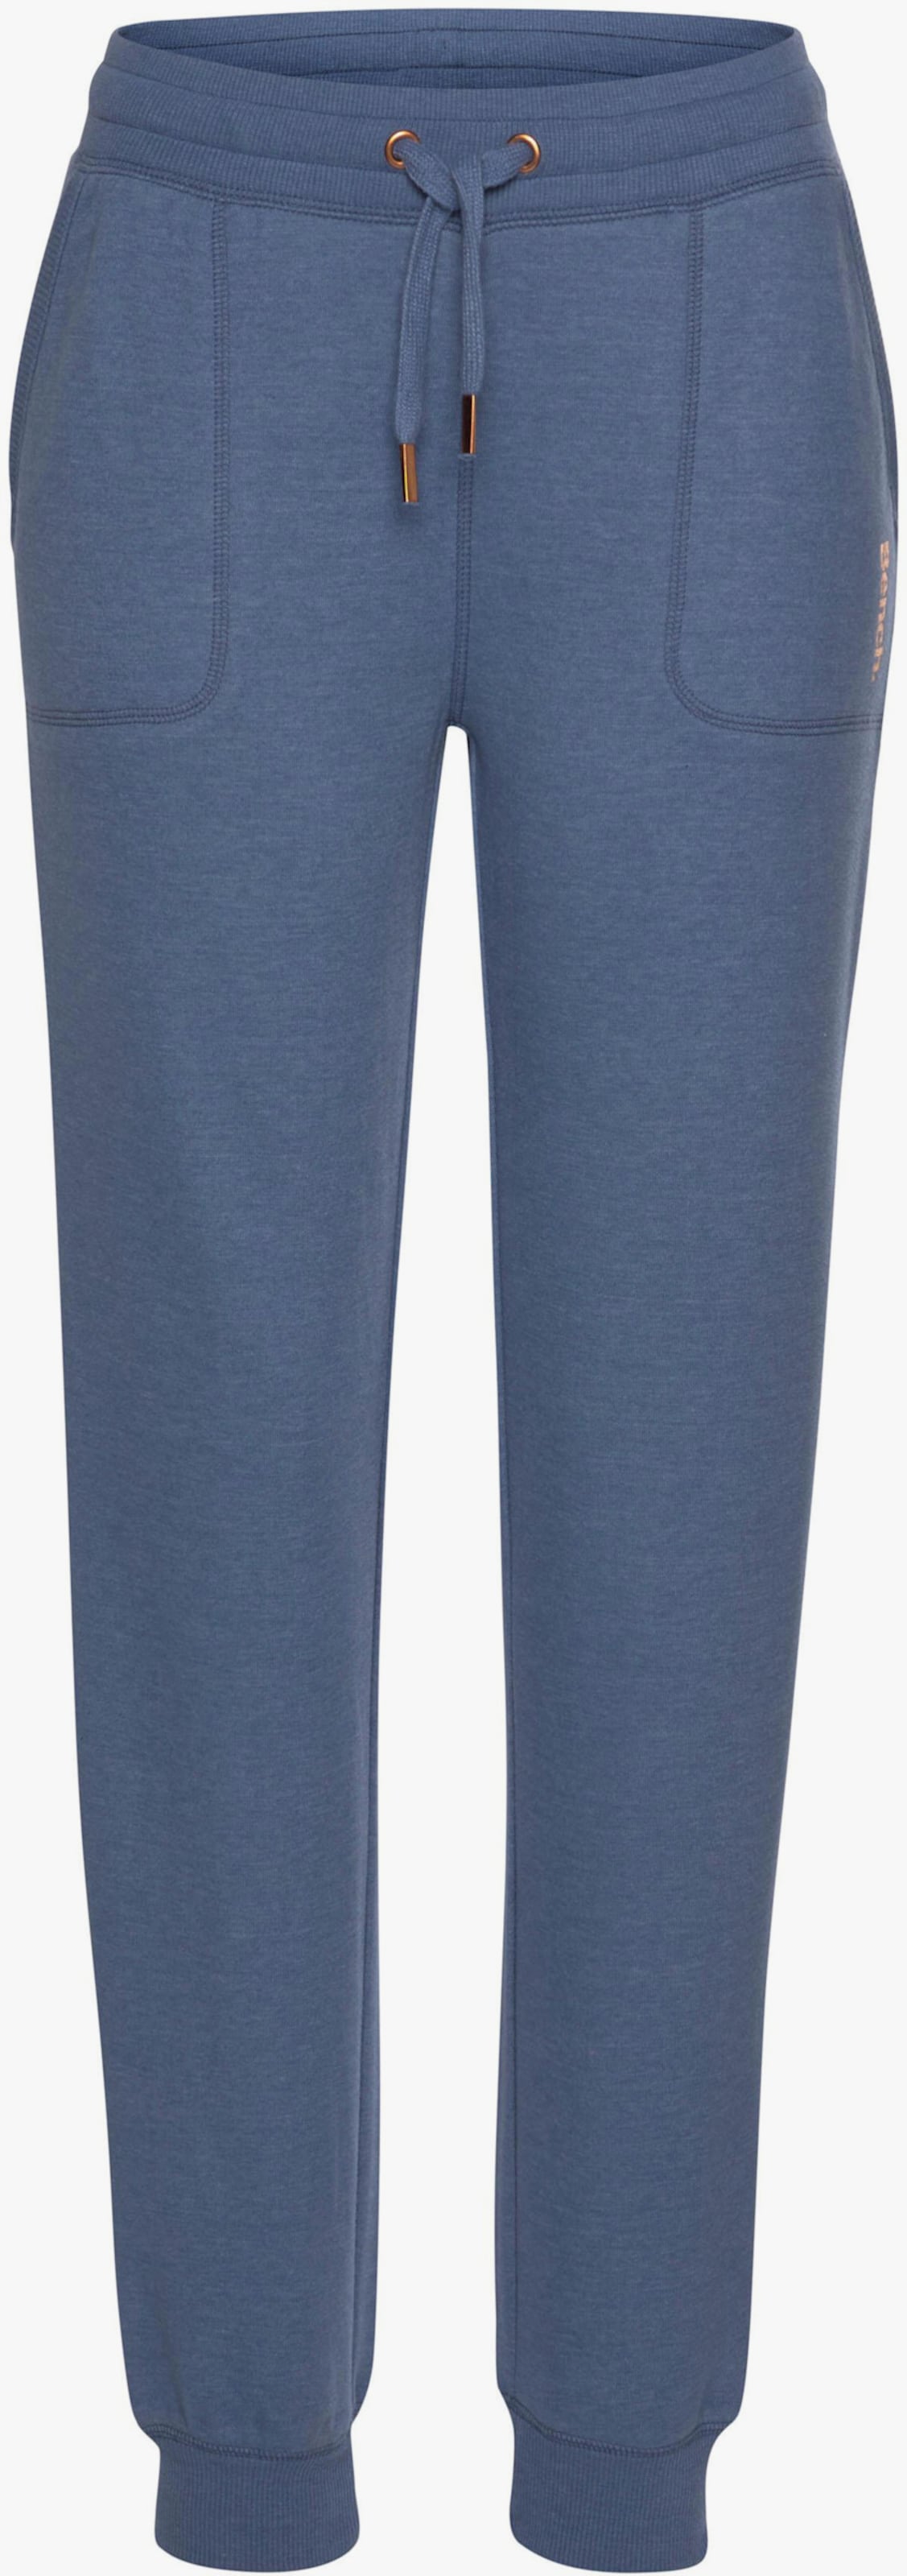 Loungehose - jeans-meliert